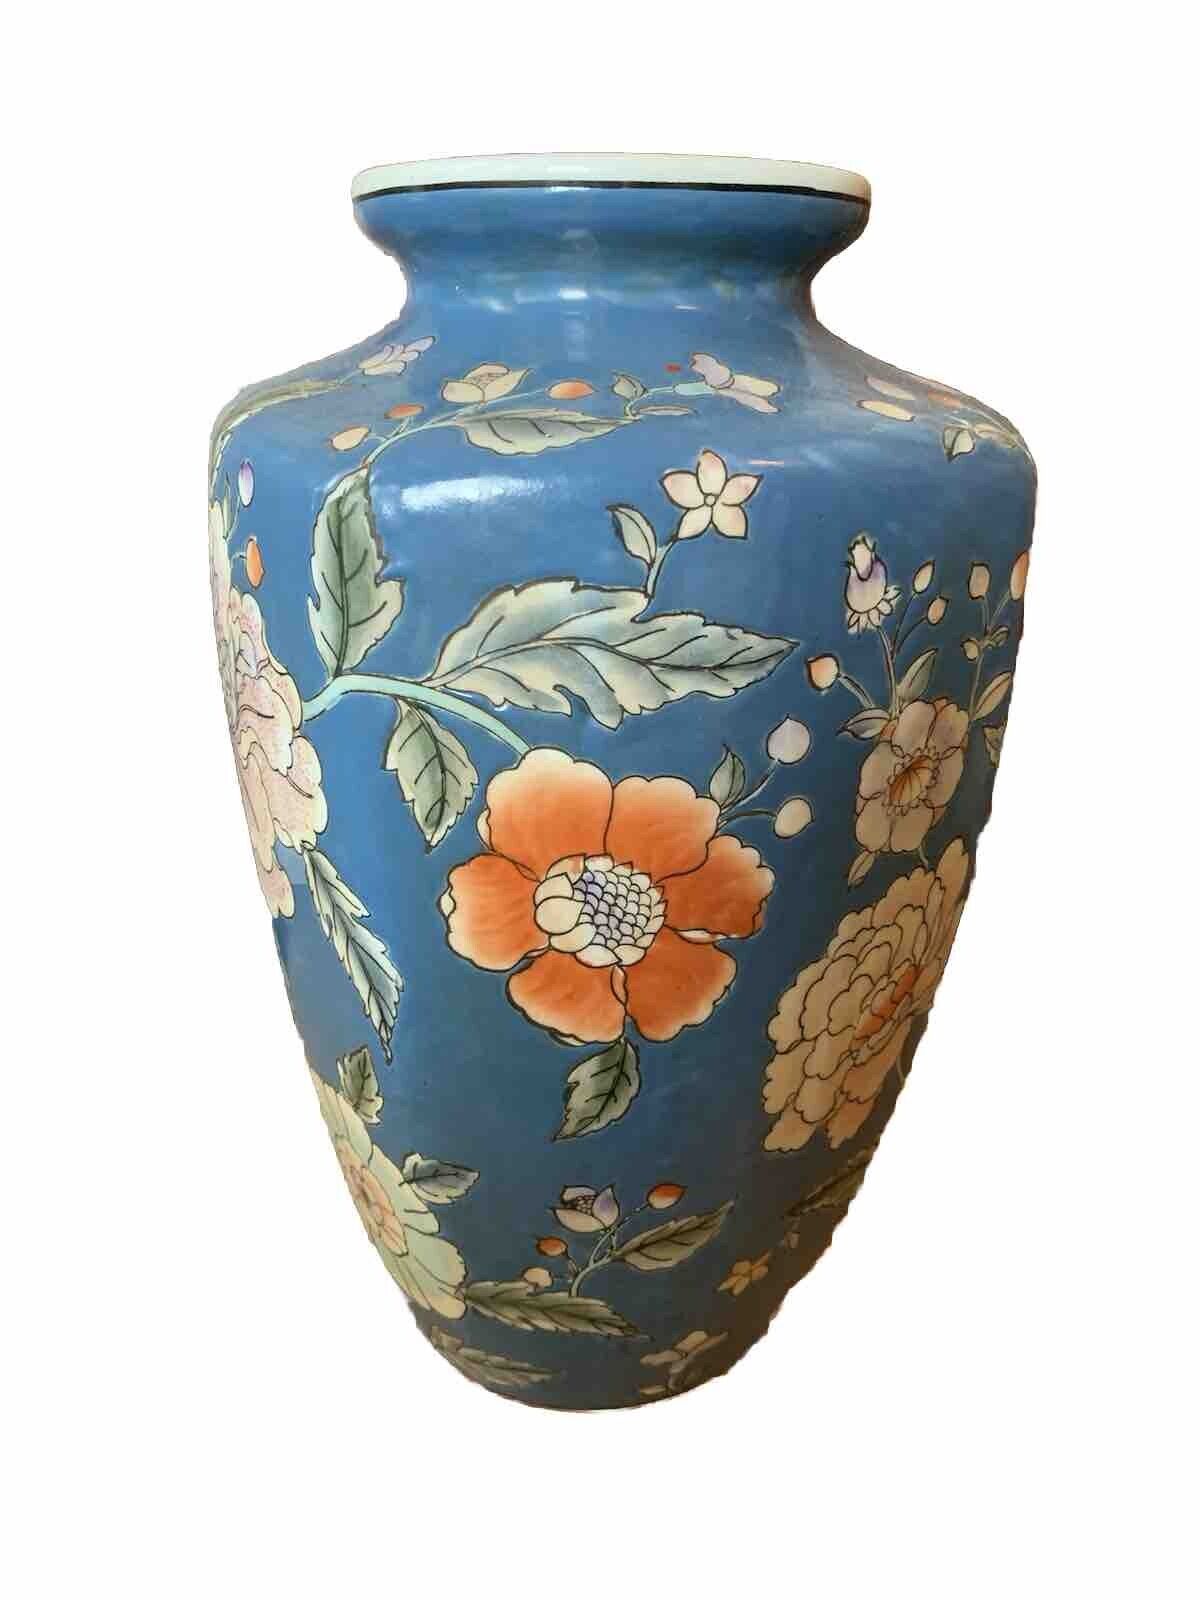 Vintage 1950s Blue Porcelain Large (12”) Hand Painted Japanese Vase From Macau